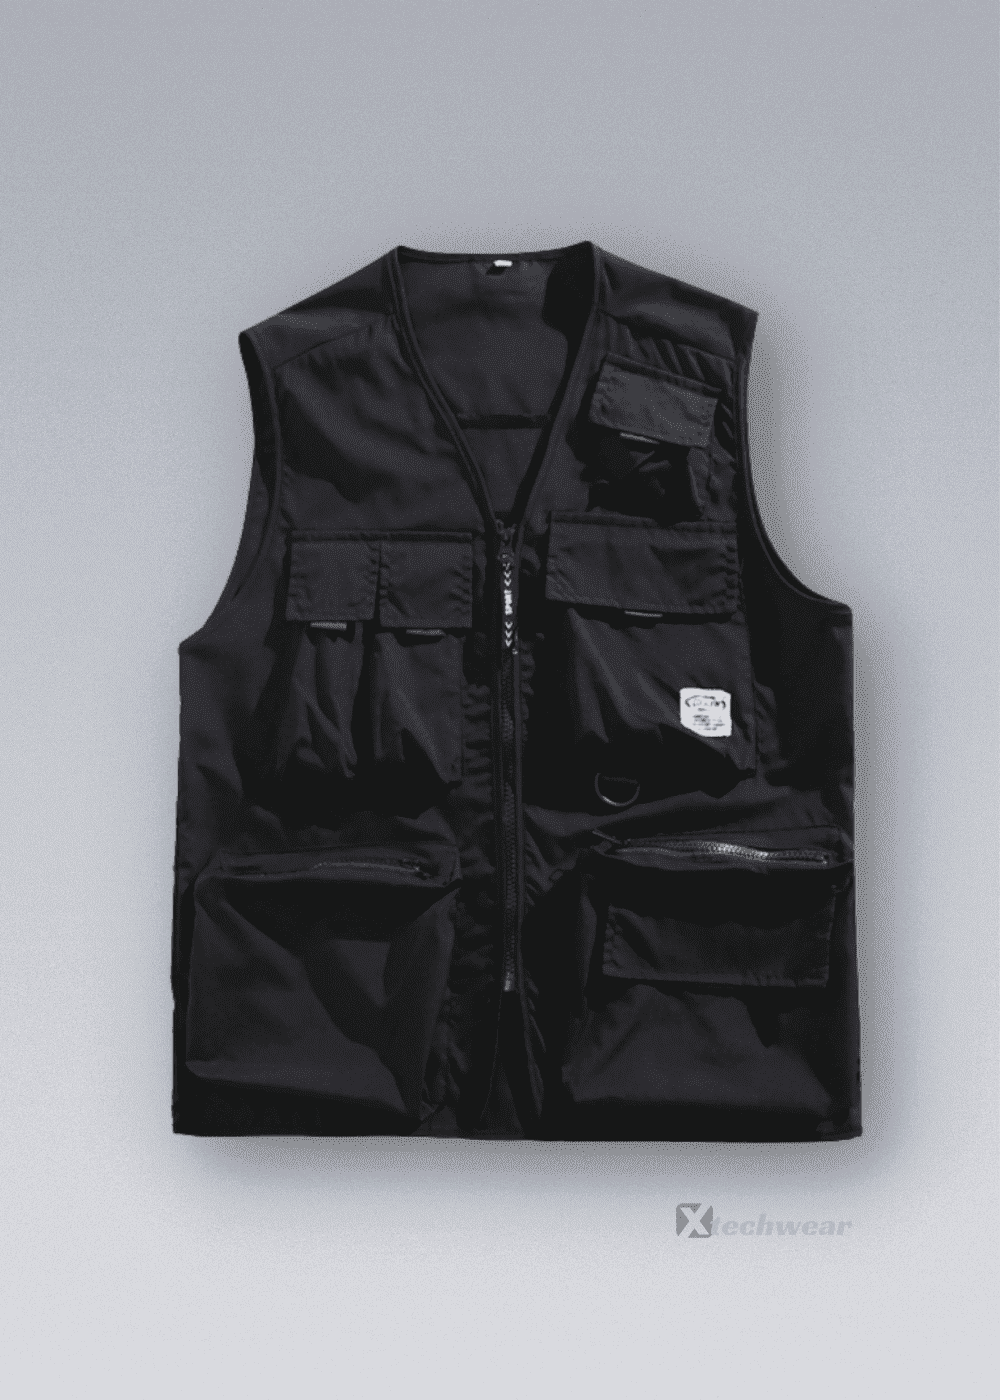 Tactical Vest - Darkwear, Warcore Shop - X